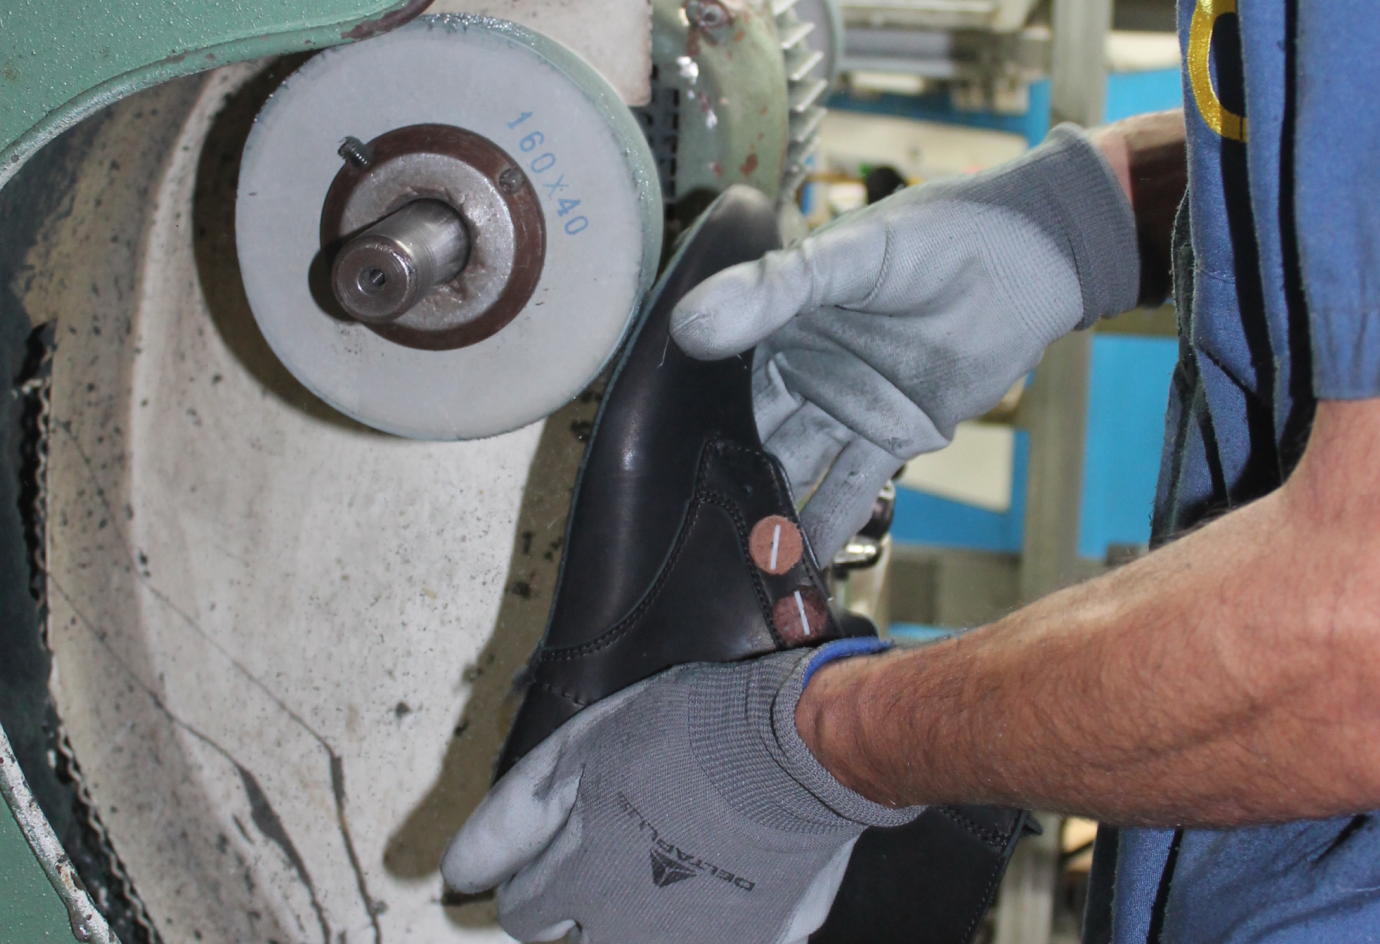 Footwear being made in the Sunspel factory